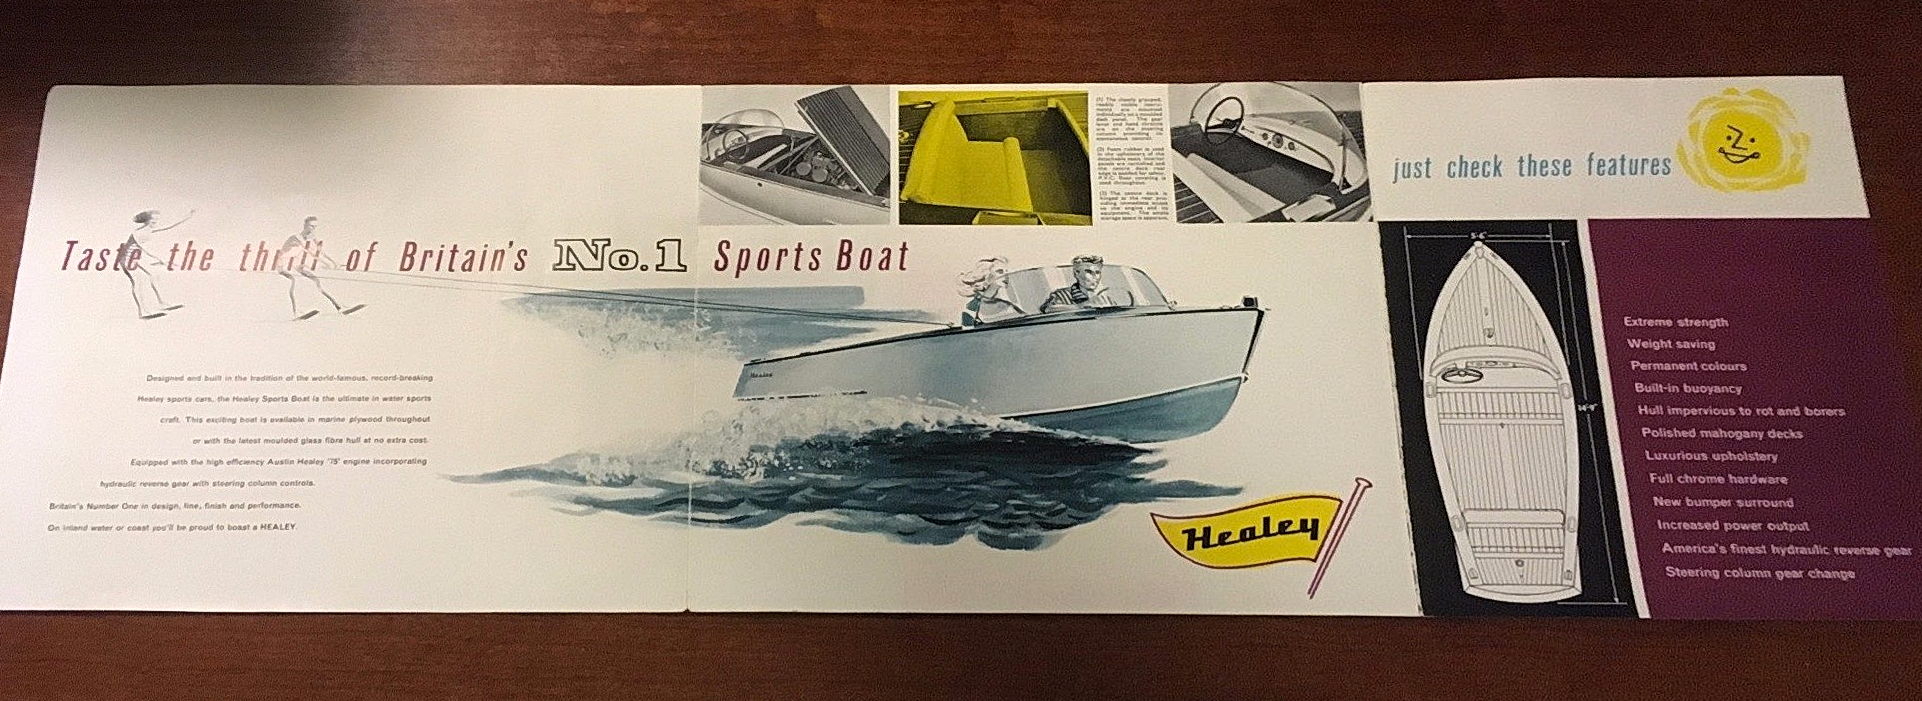 587ec71b9dd0c_Healey-Sportsboat-Brochure-3